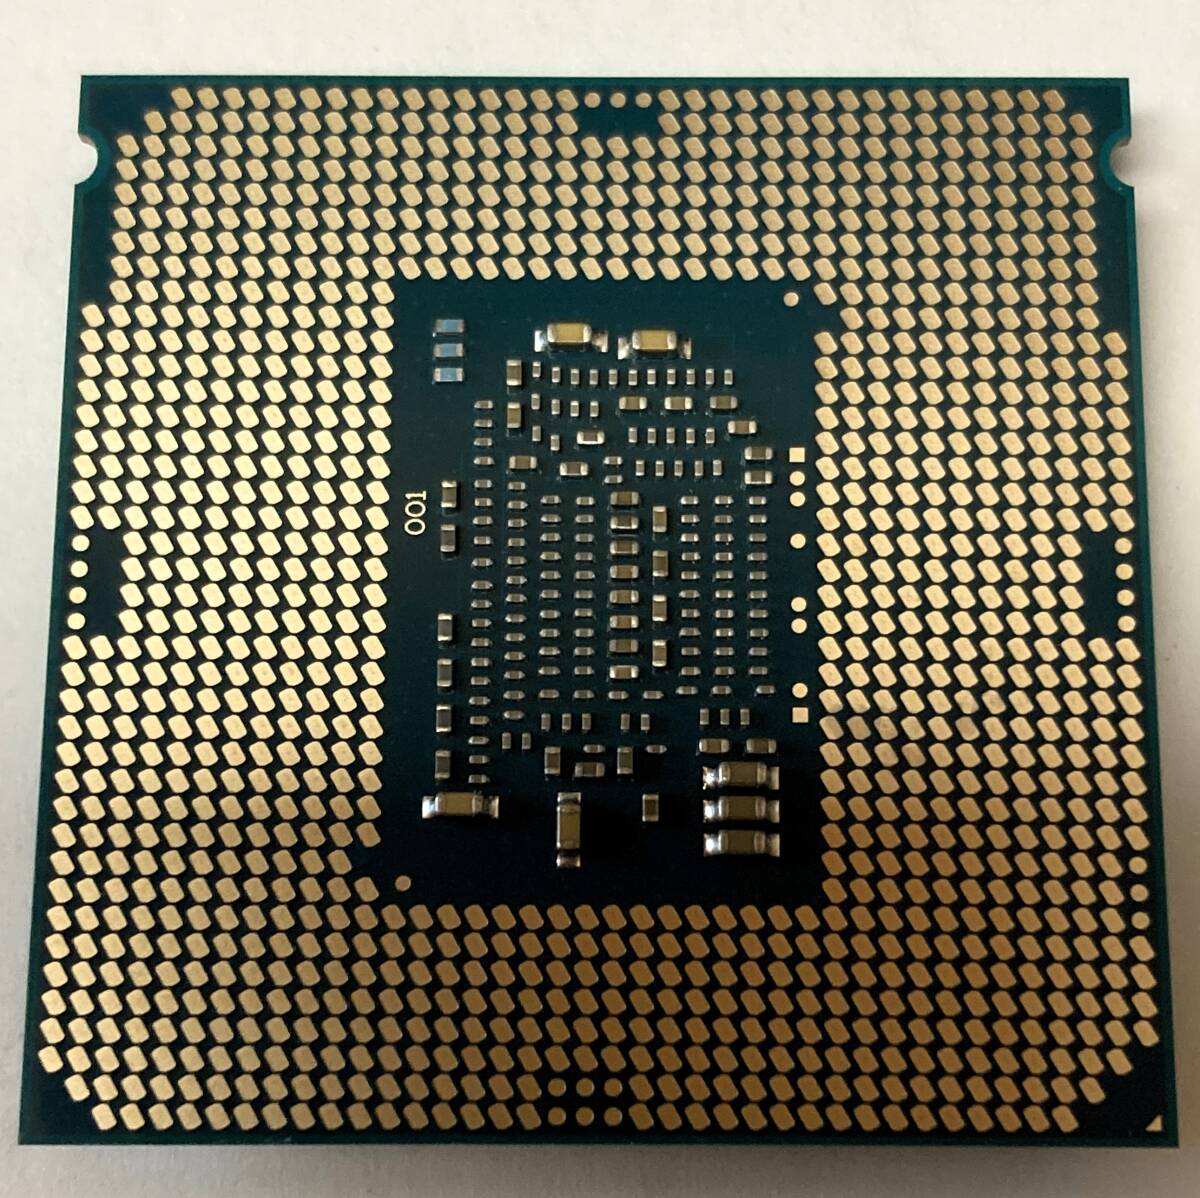 #Intel Core i7-6700T 2.8GHz SR2L3 Skylake power saving type / used #